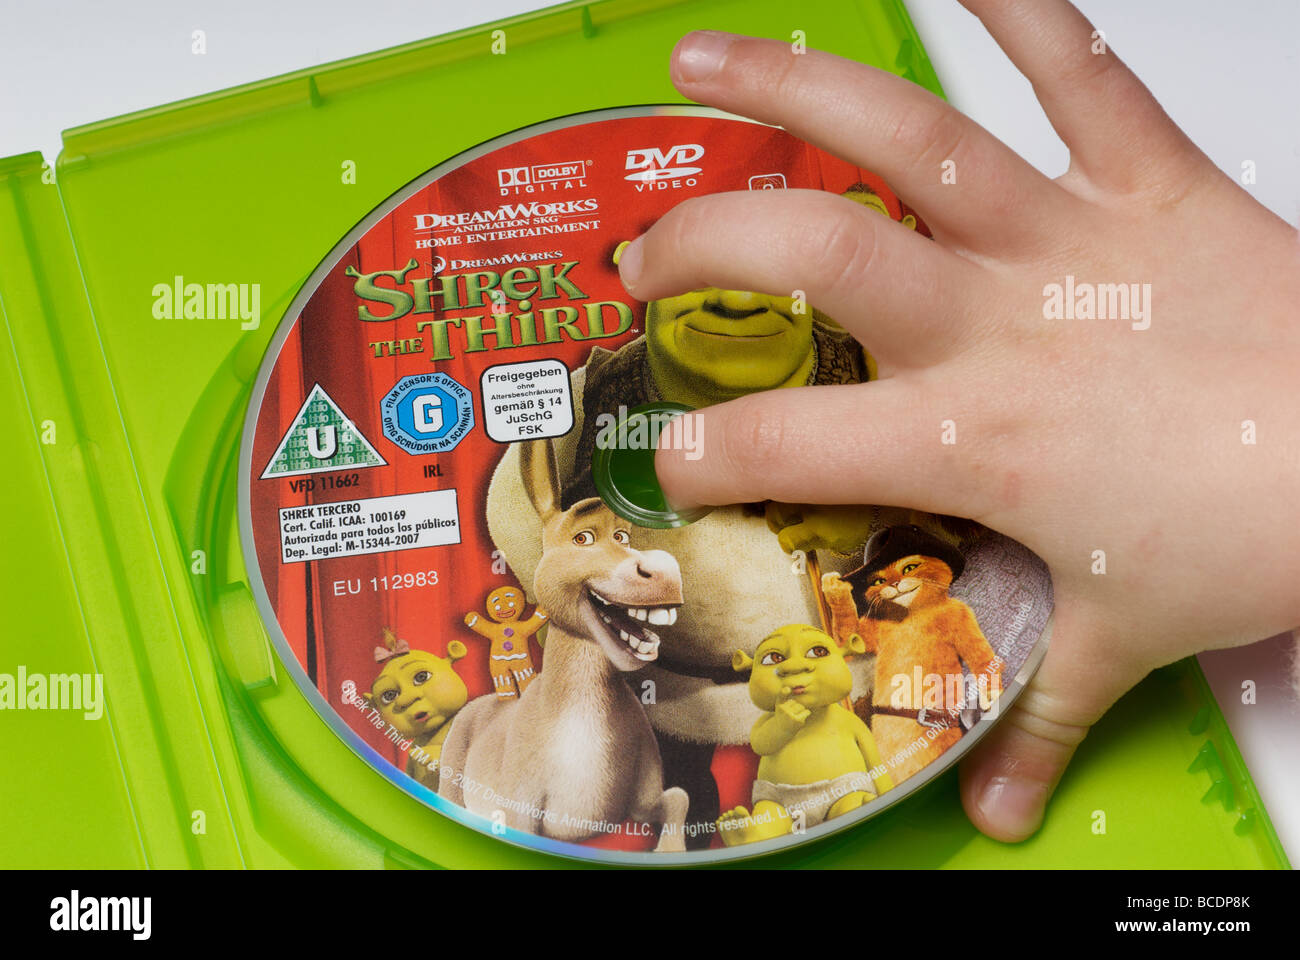 Shrek the Third DVD Stock Photo - Alamy